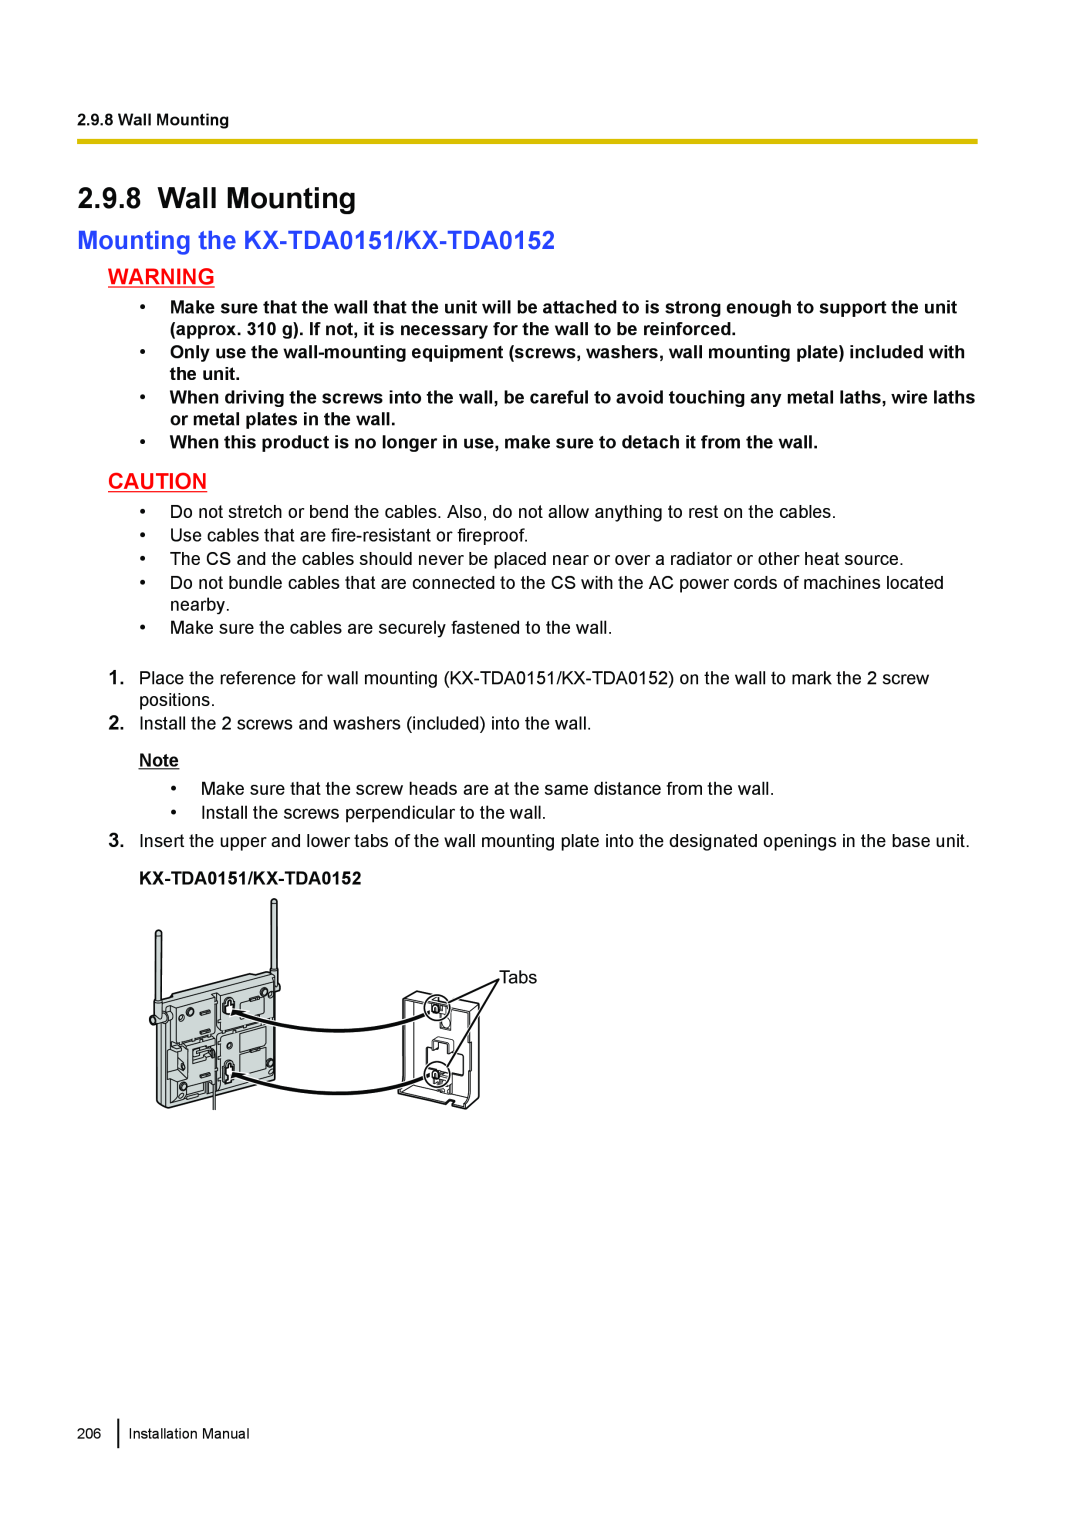 Panasonic KX-TDA100 installation manual Wall Mounting, Mounting the KX-TDA0151/KX-TDA0152 